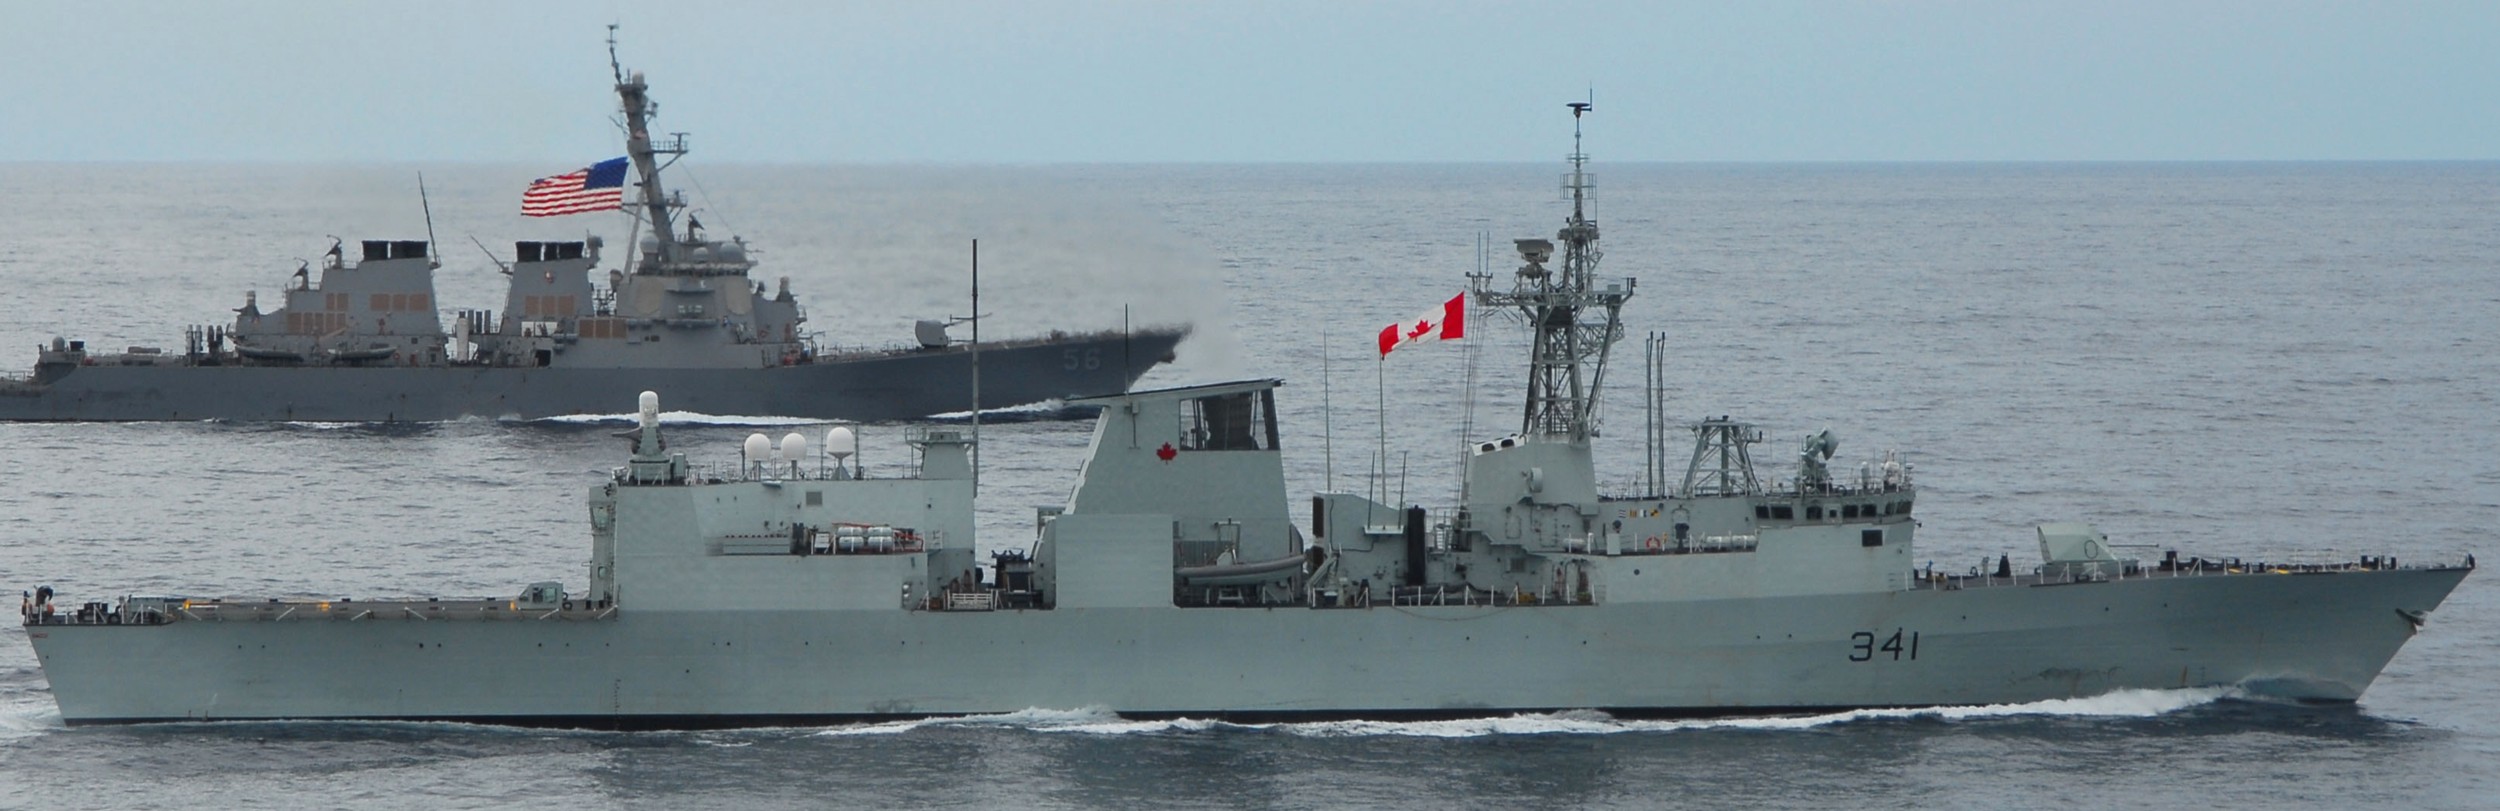 ffh-441 hmcs ottawa halifax class helicopter patrol frigate ncsm royal canadian navy 06